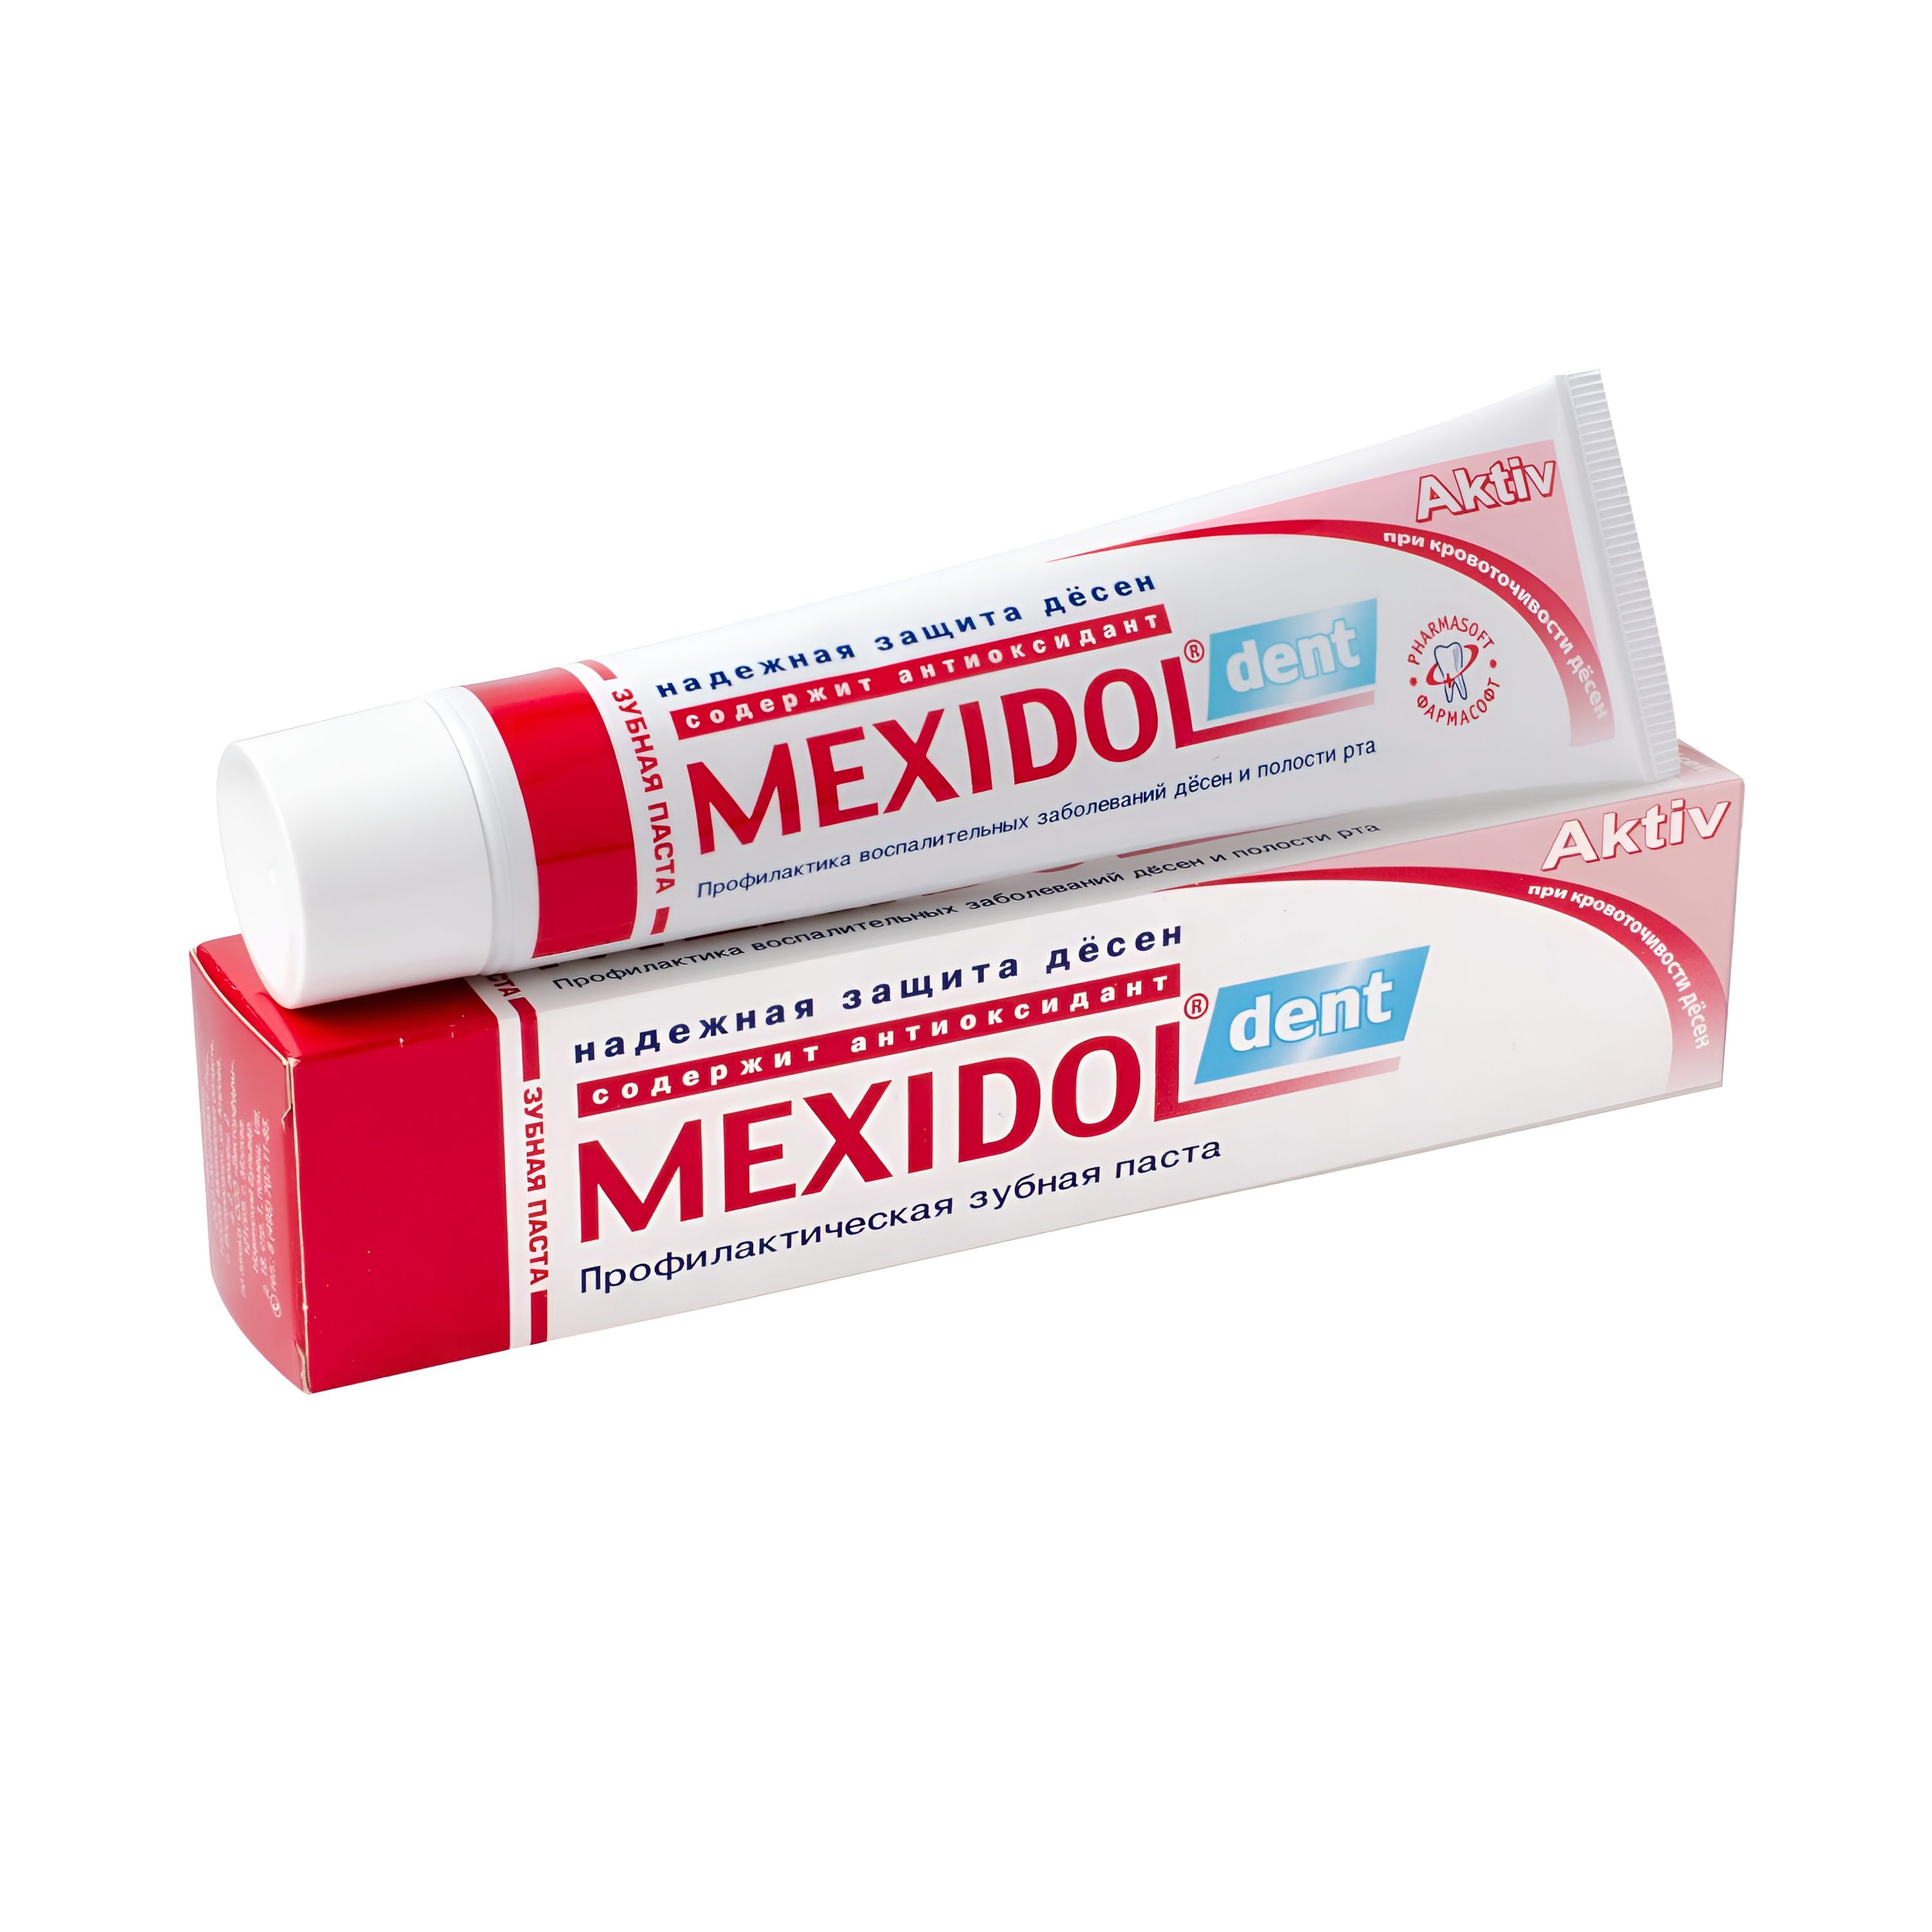 Мексидол Дент Актив, зубная паста, 65 г з паста мексидол дент фито 100г